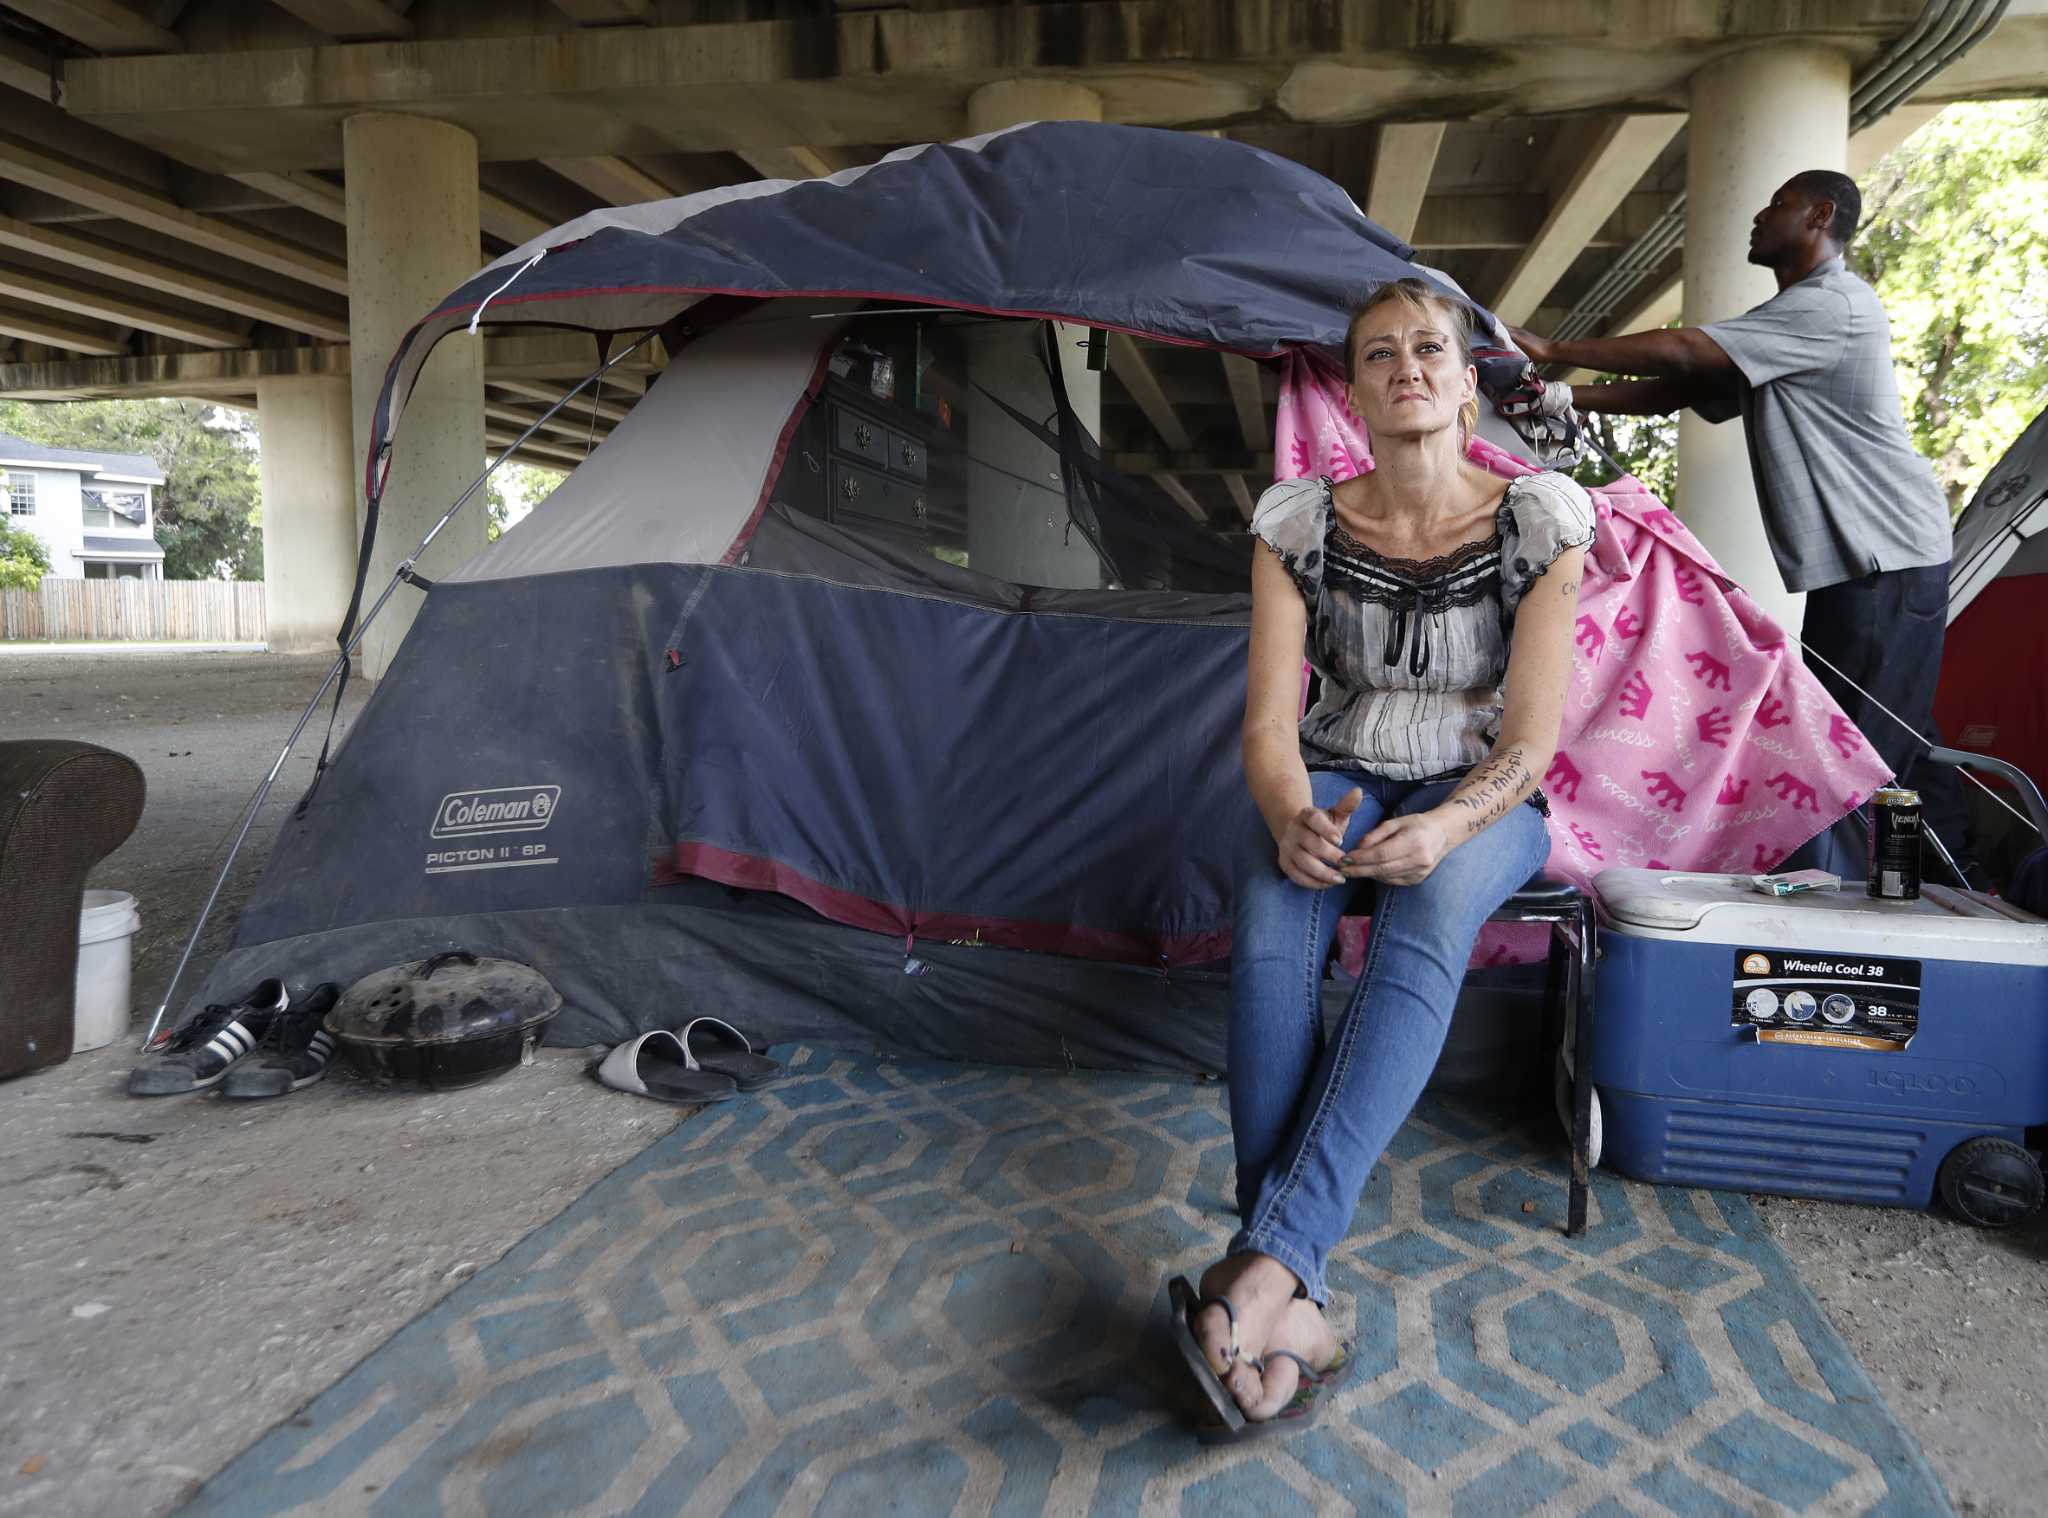 Plan for homeless shelter in part of Metro depot advances - Houston Chronicle2048 x 1518